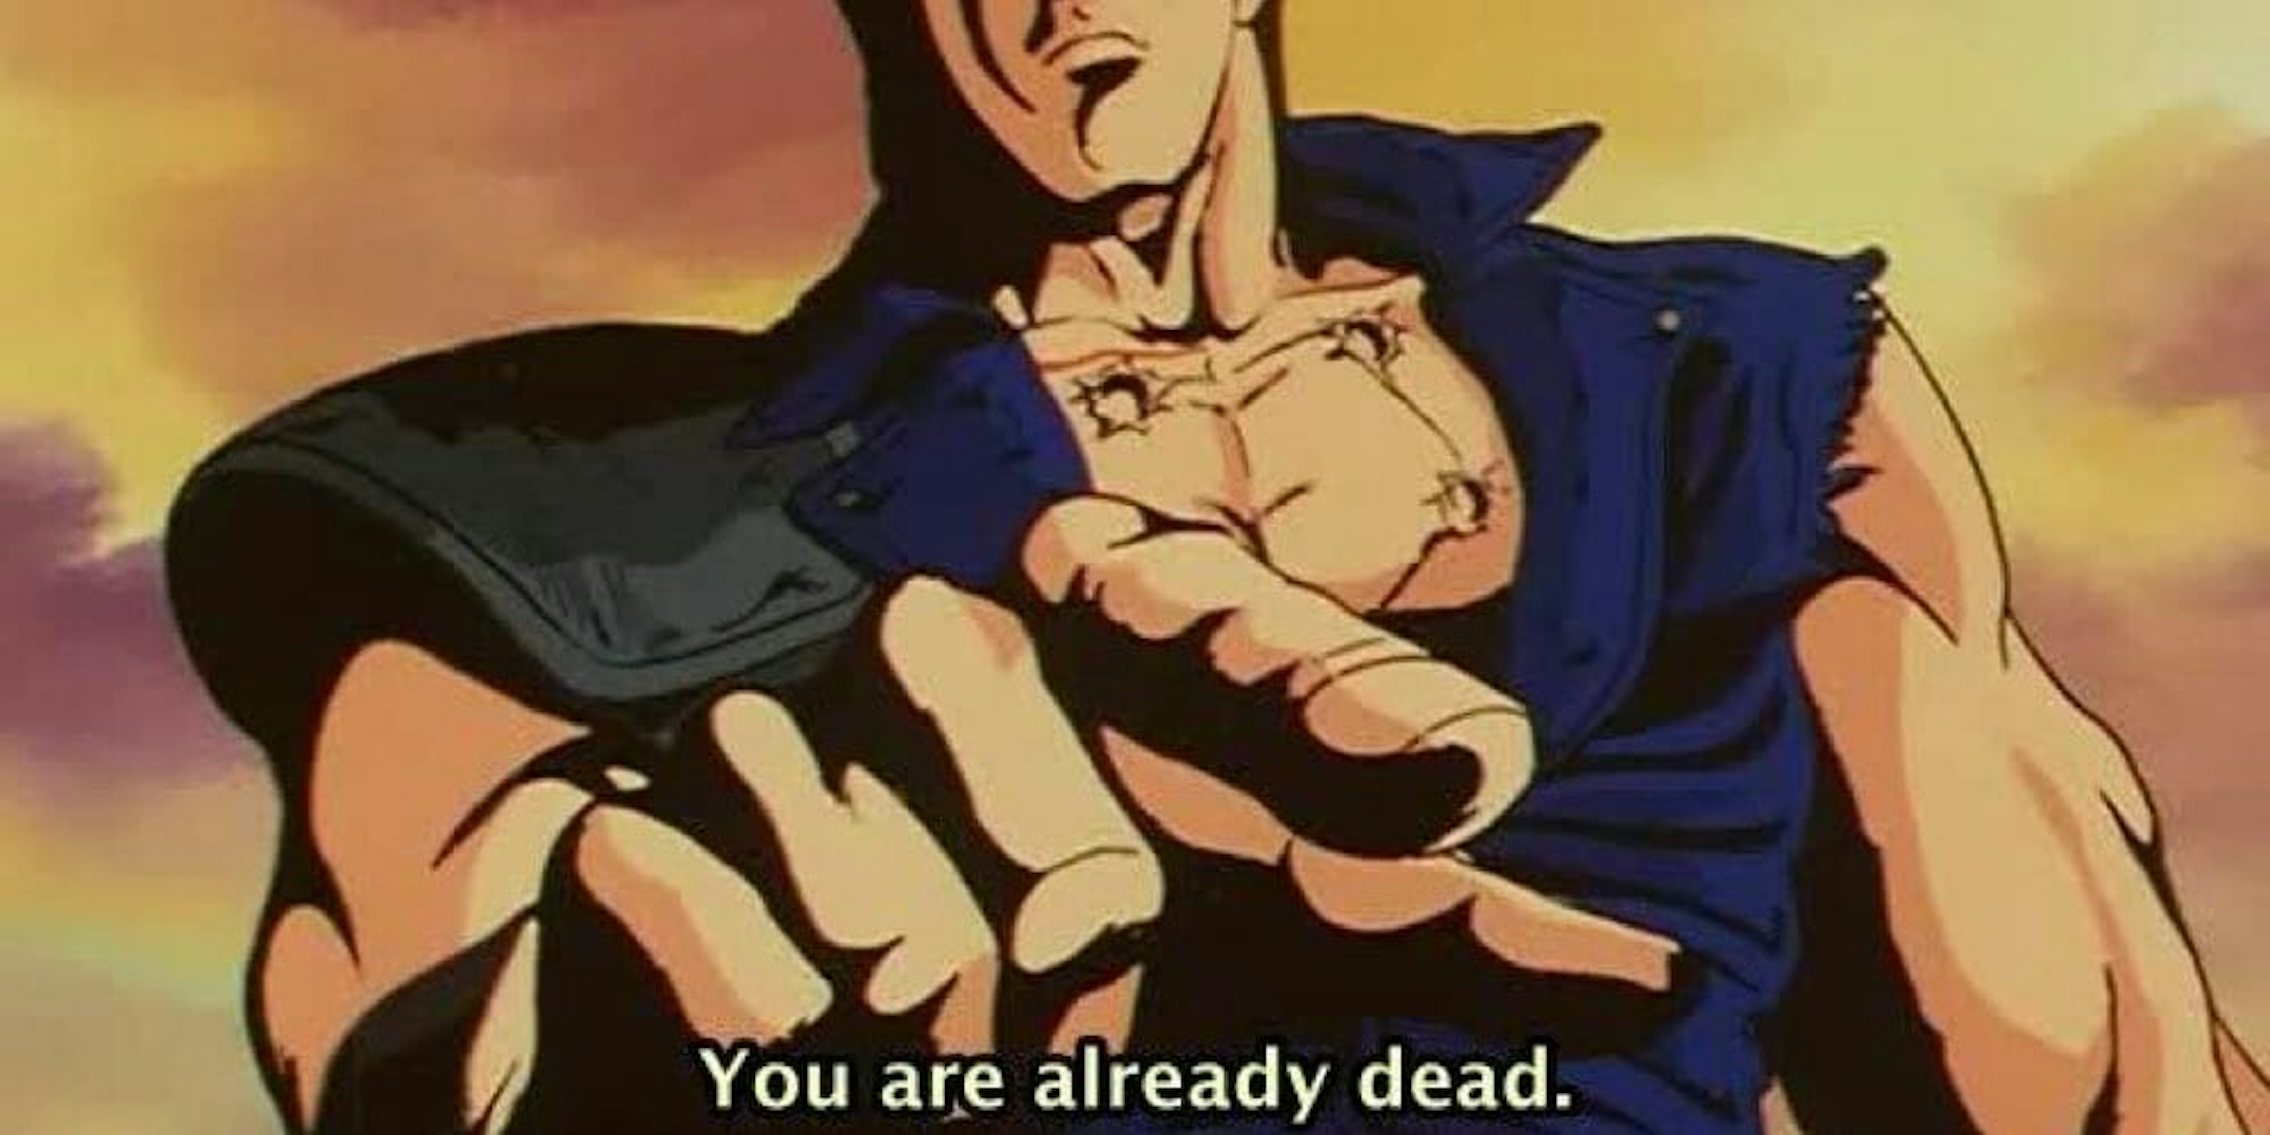 Omae wa Mou Shindeiru (You Are Already Dead) Is a Big Anime Meme